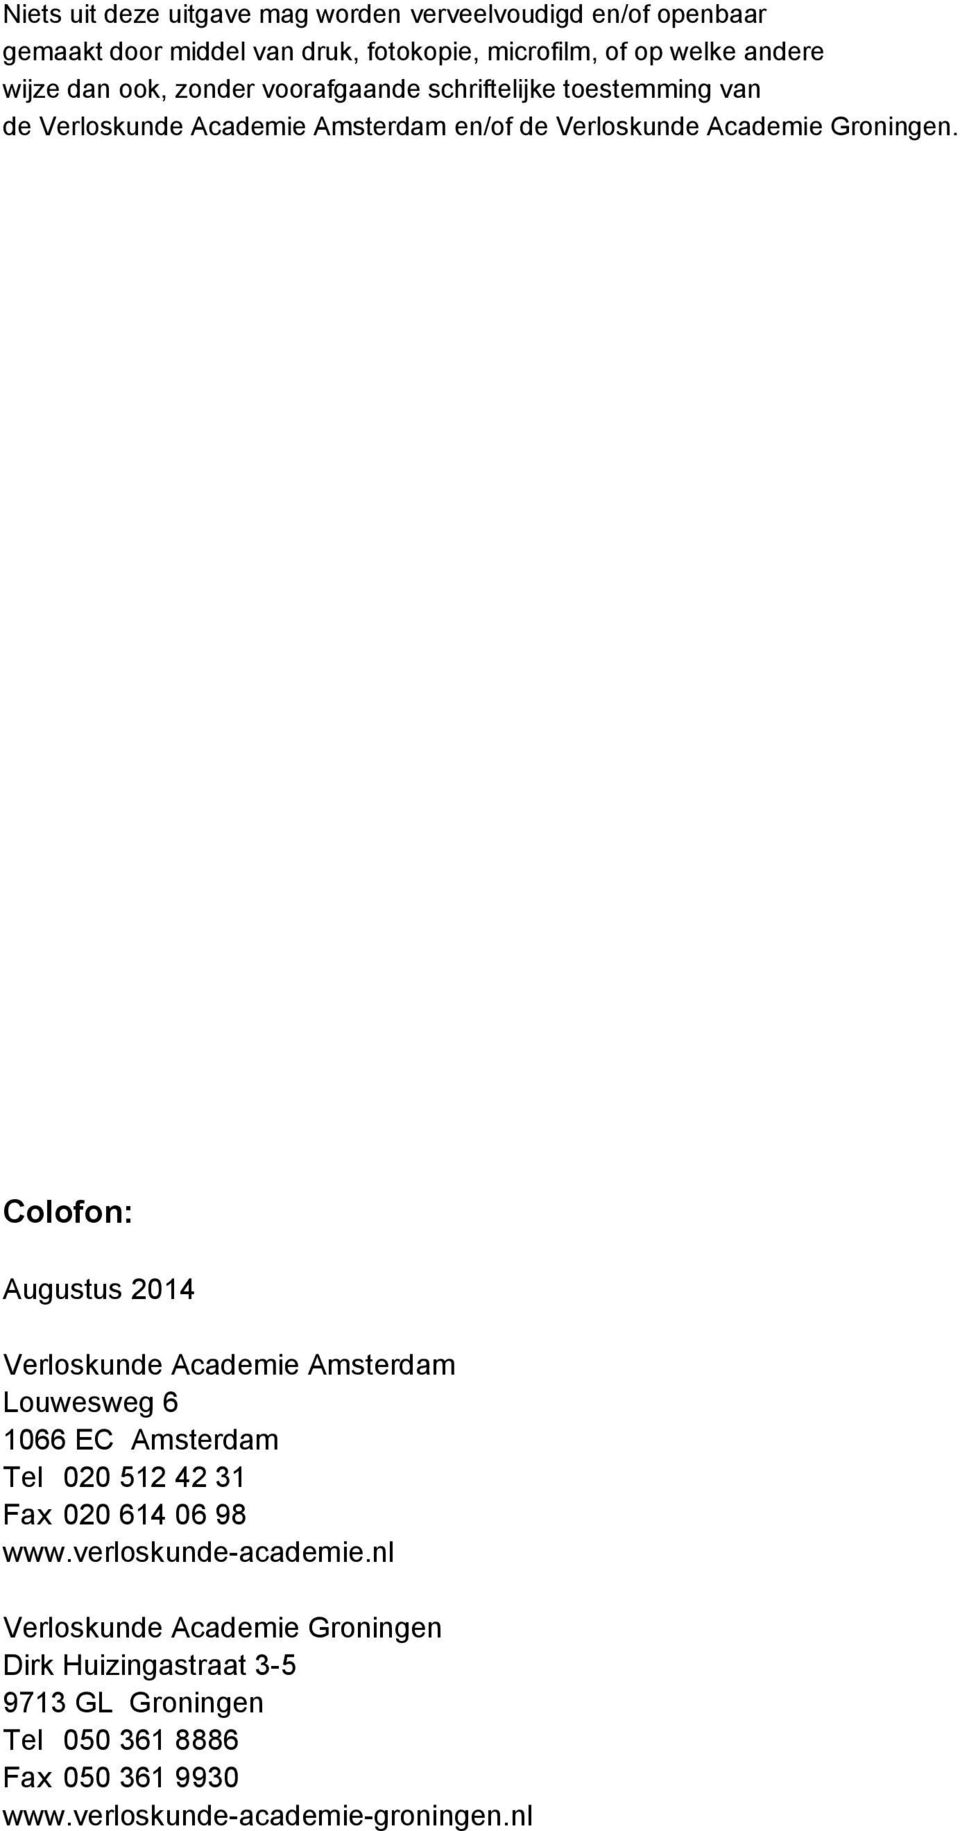 Colofon: Augustus 2014 Verloskunde Academie Amsterdam Louwesweg 6 1066 EC Amsterdam Tel 020 512 42 31 Fax 020 614 06 98 www.